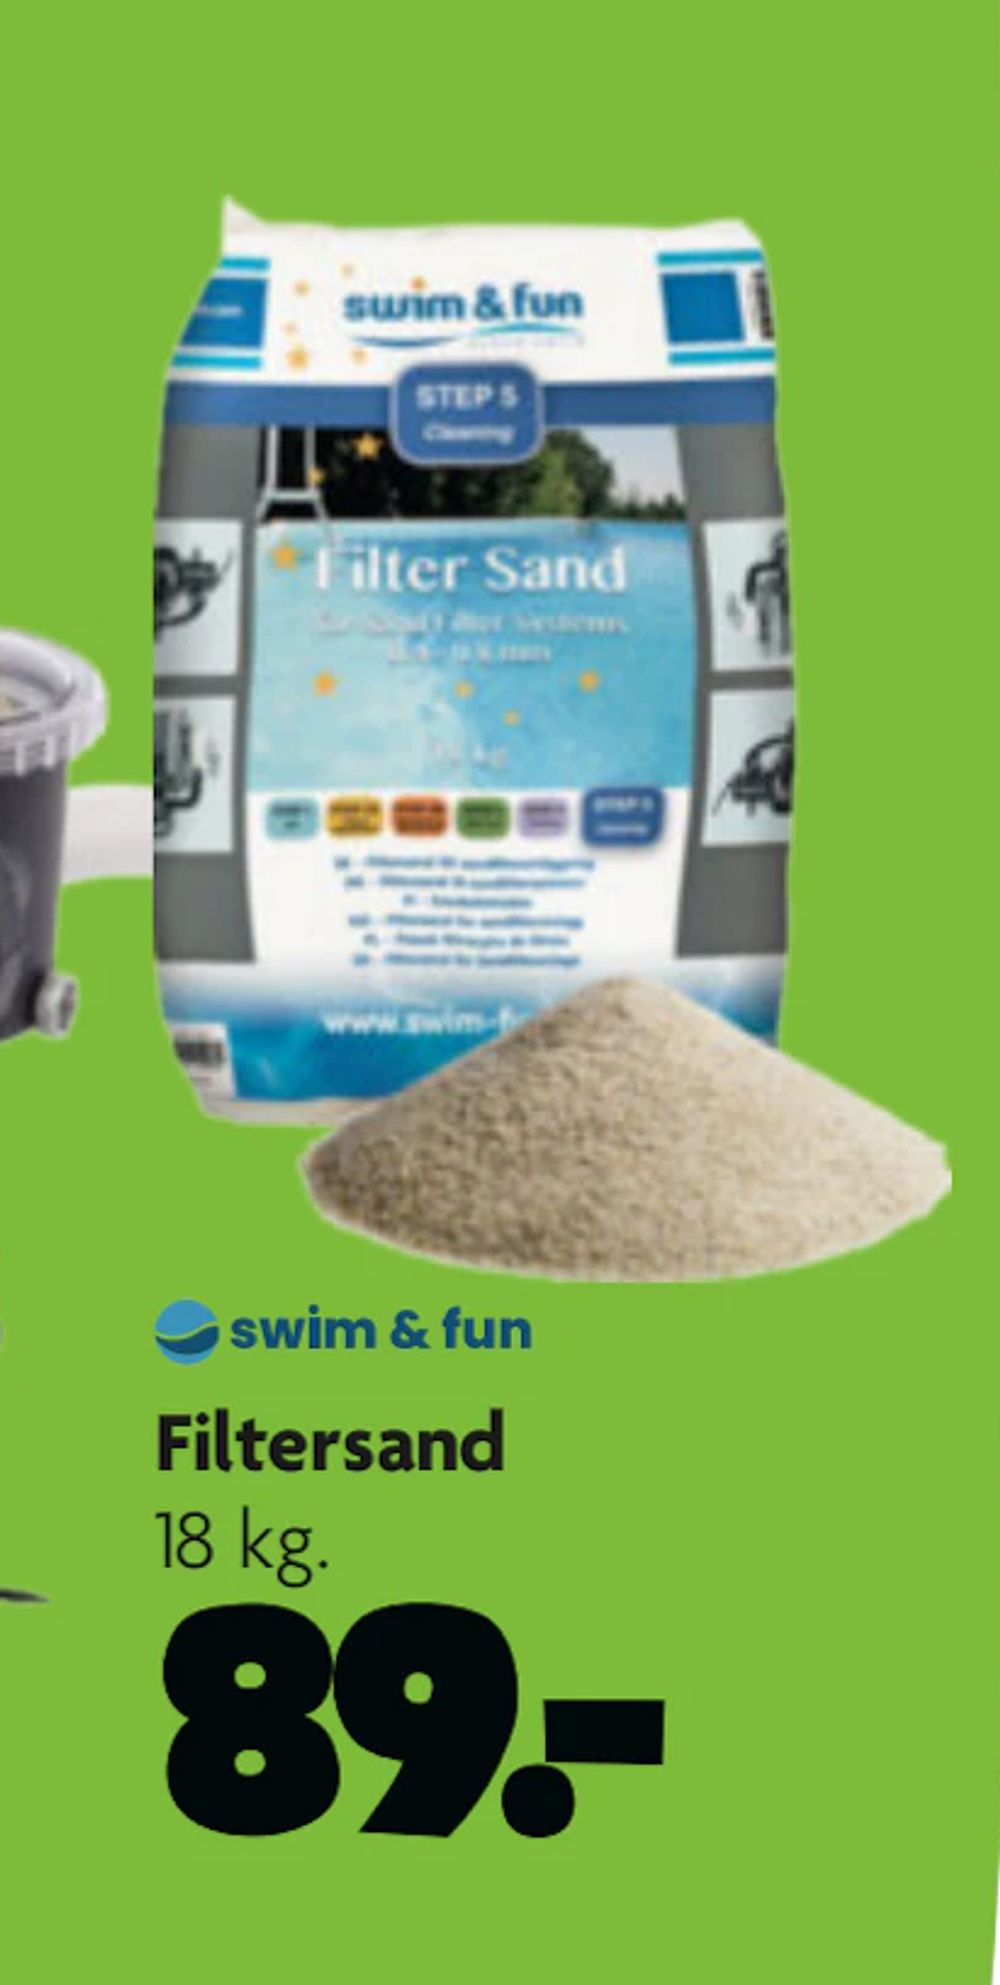 Tilbud på Filtersand fra BR til 89 kr.